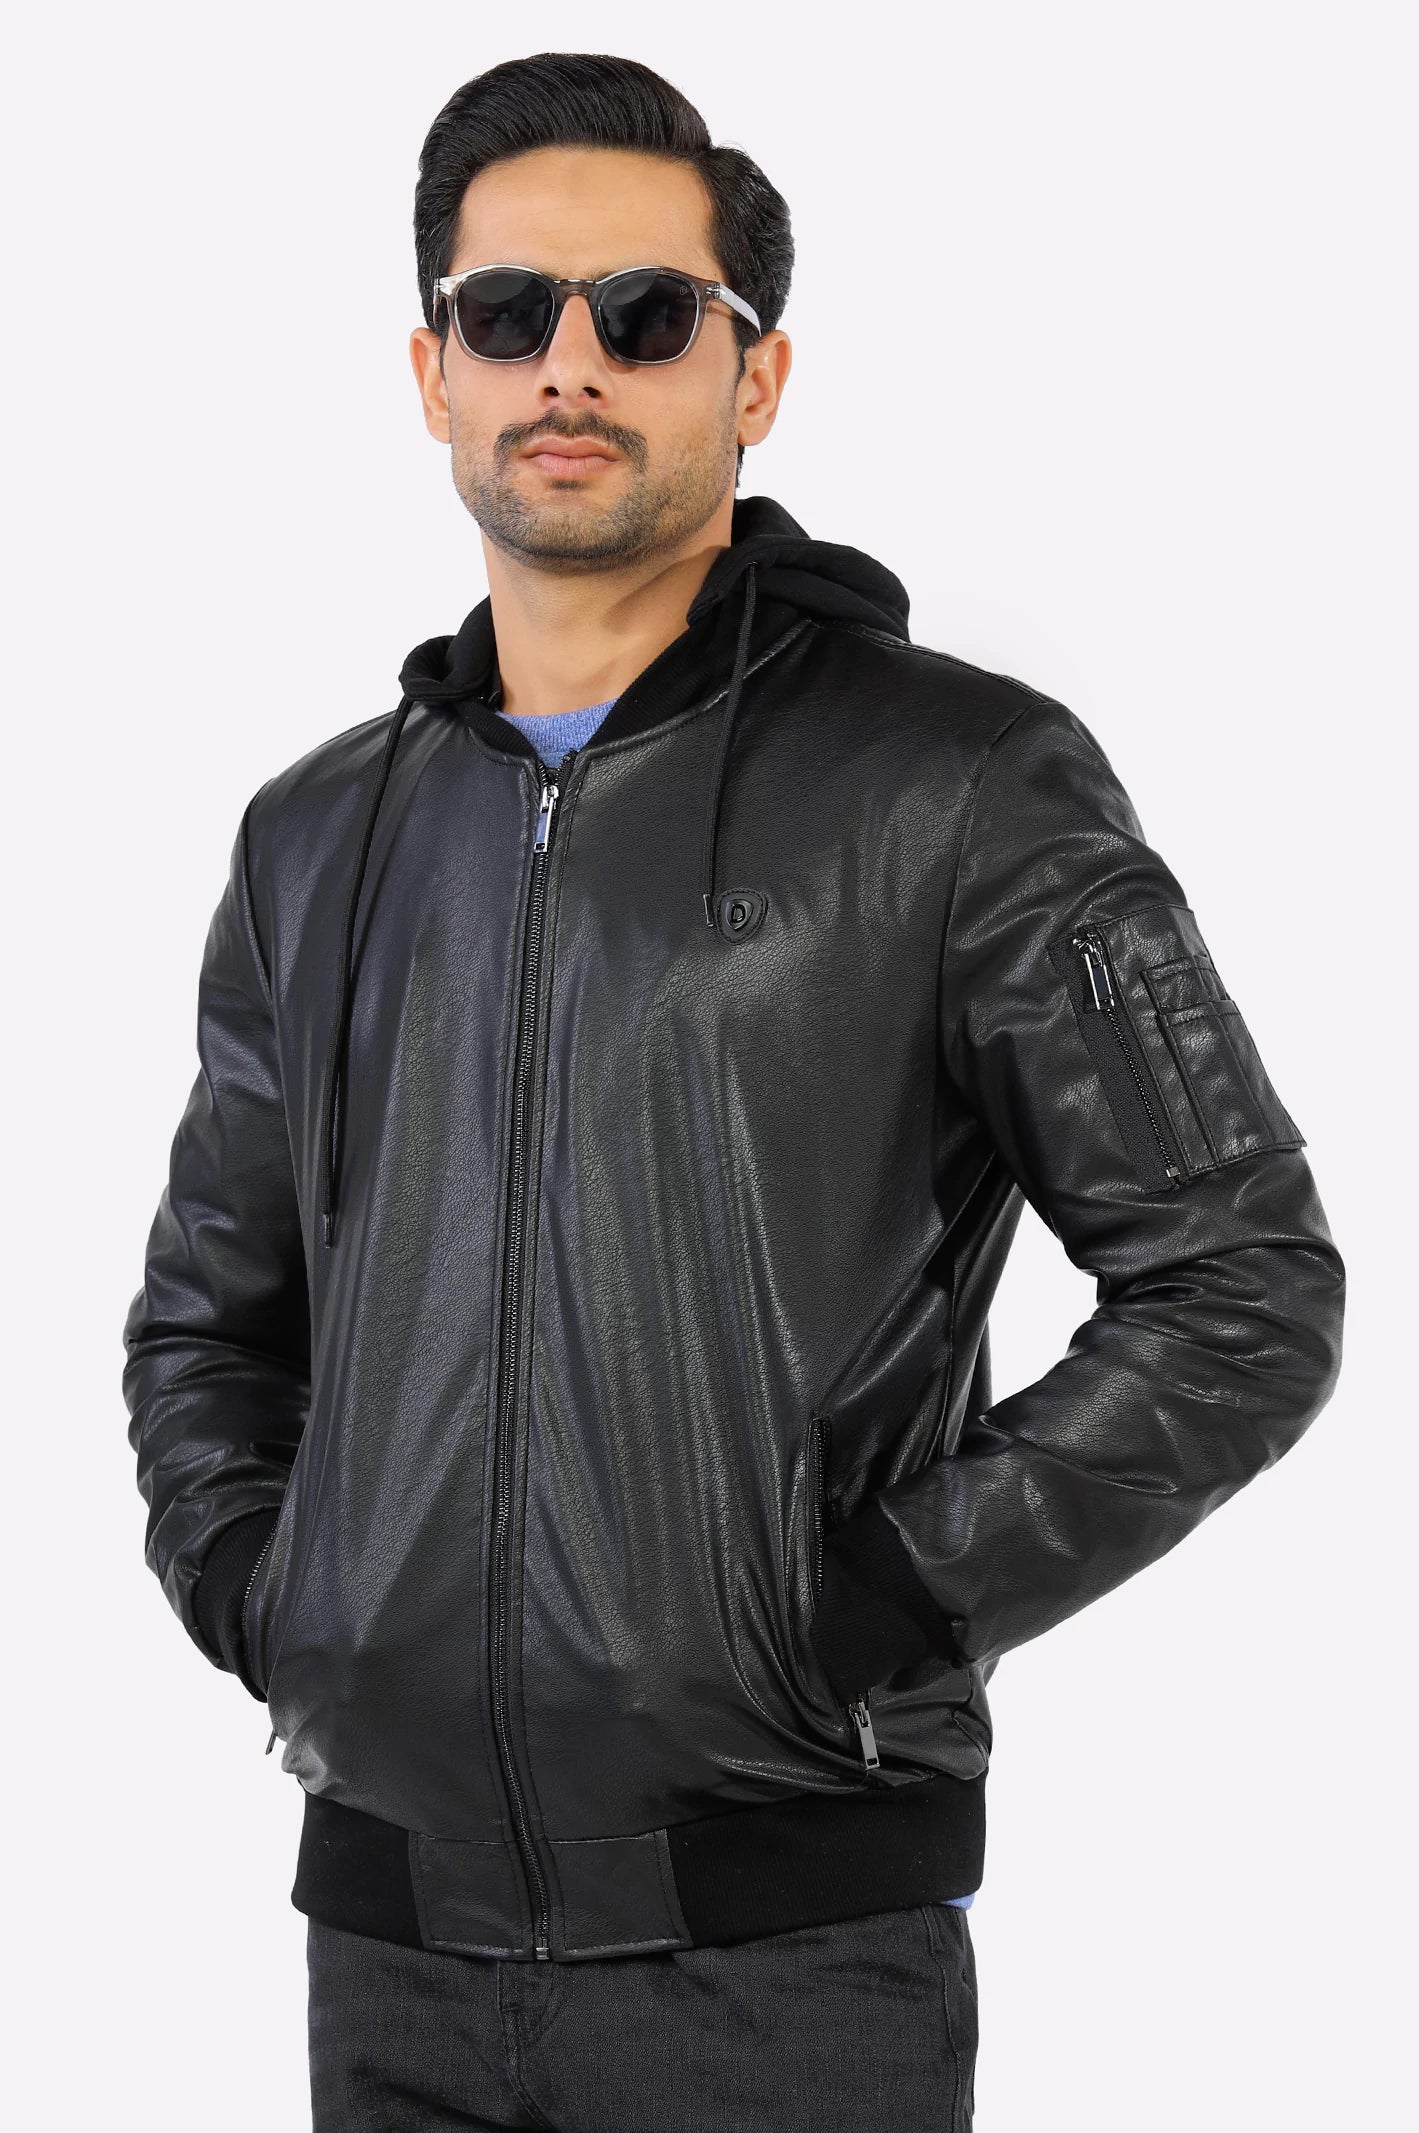 Mens Black Hooded Leather Jacket